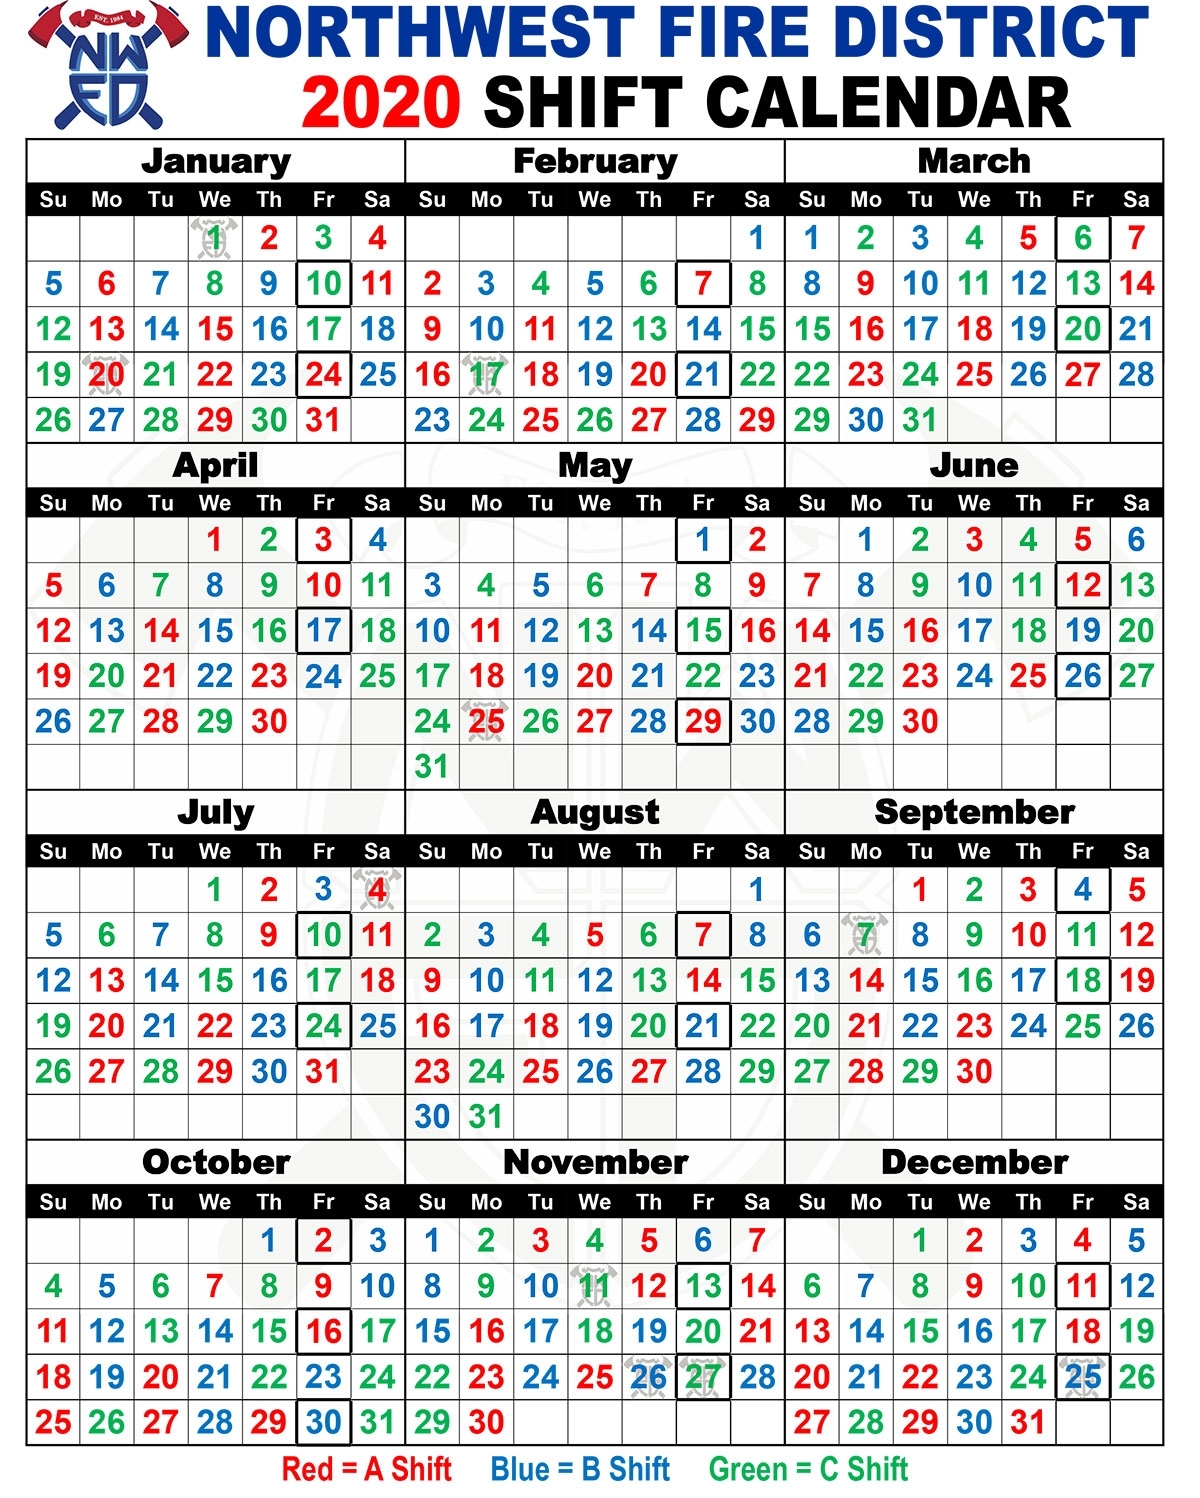 Shift Schedules | Northwest Fire District regarding 12 Hour Shift Calendar 2020